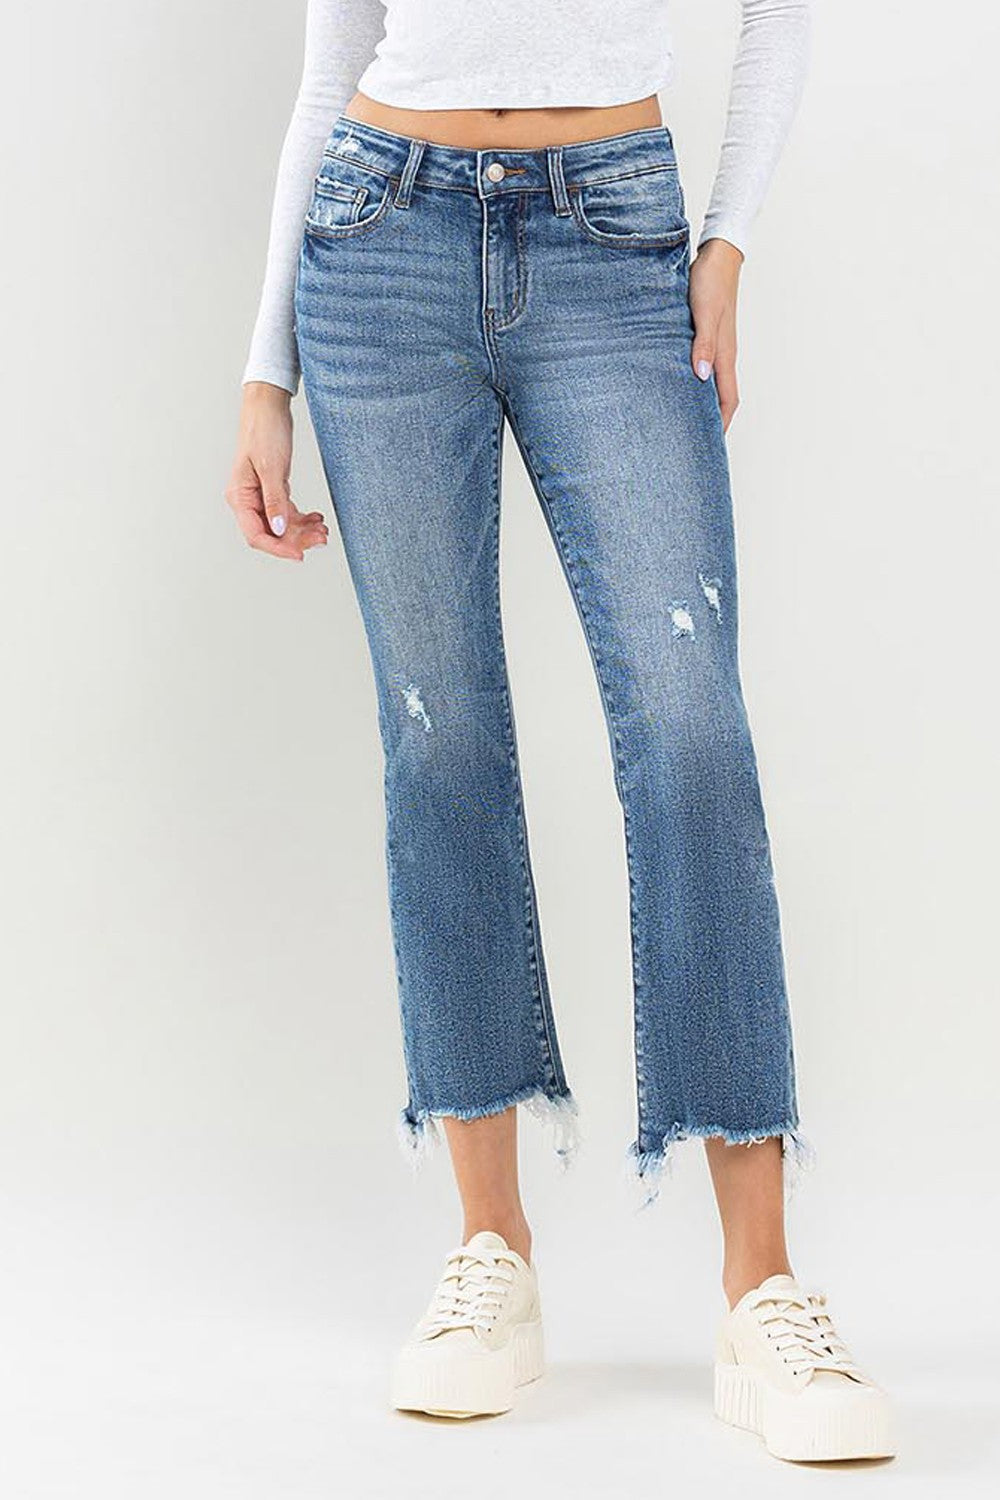 Clara - Mid Rise Frayed Hem Jeans - Lovervet - Exclusively Online